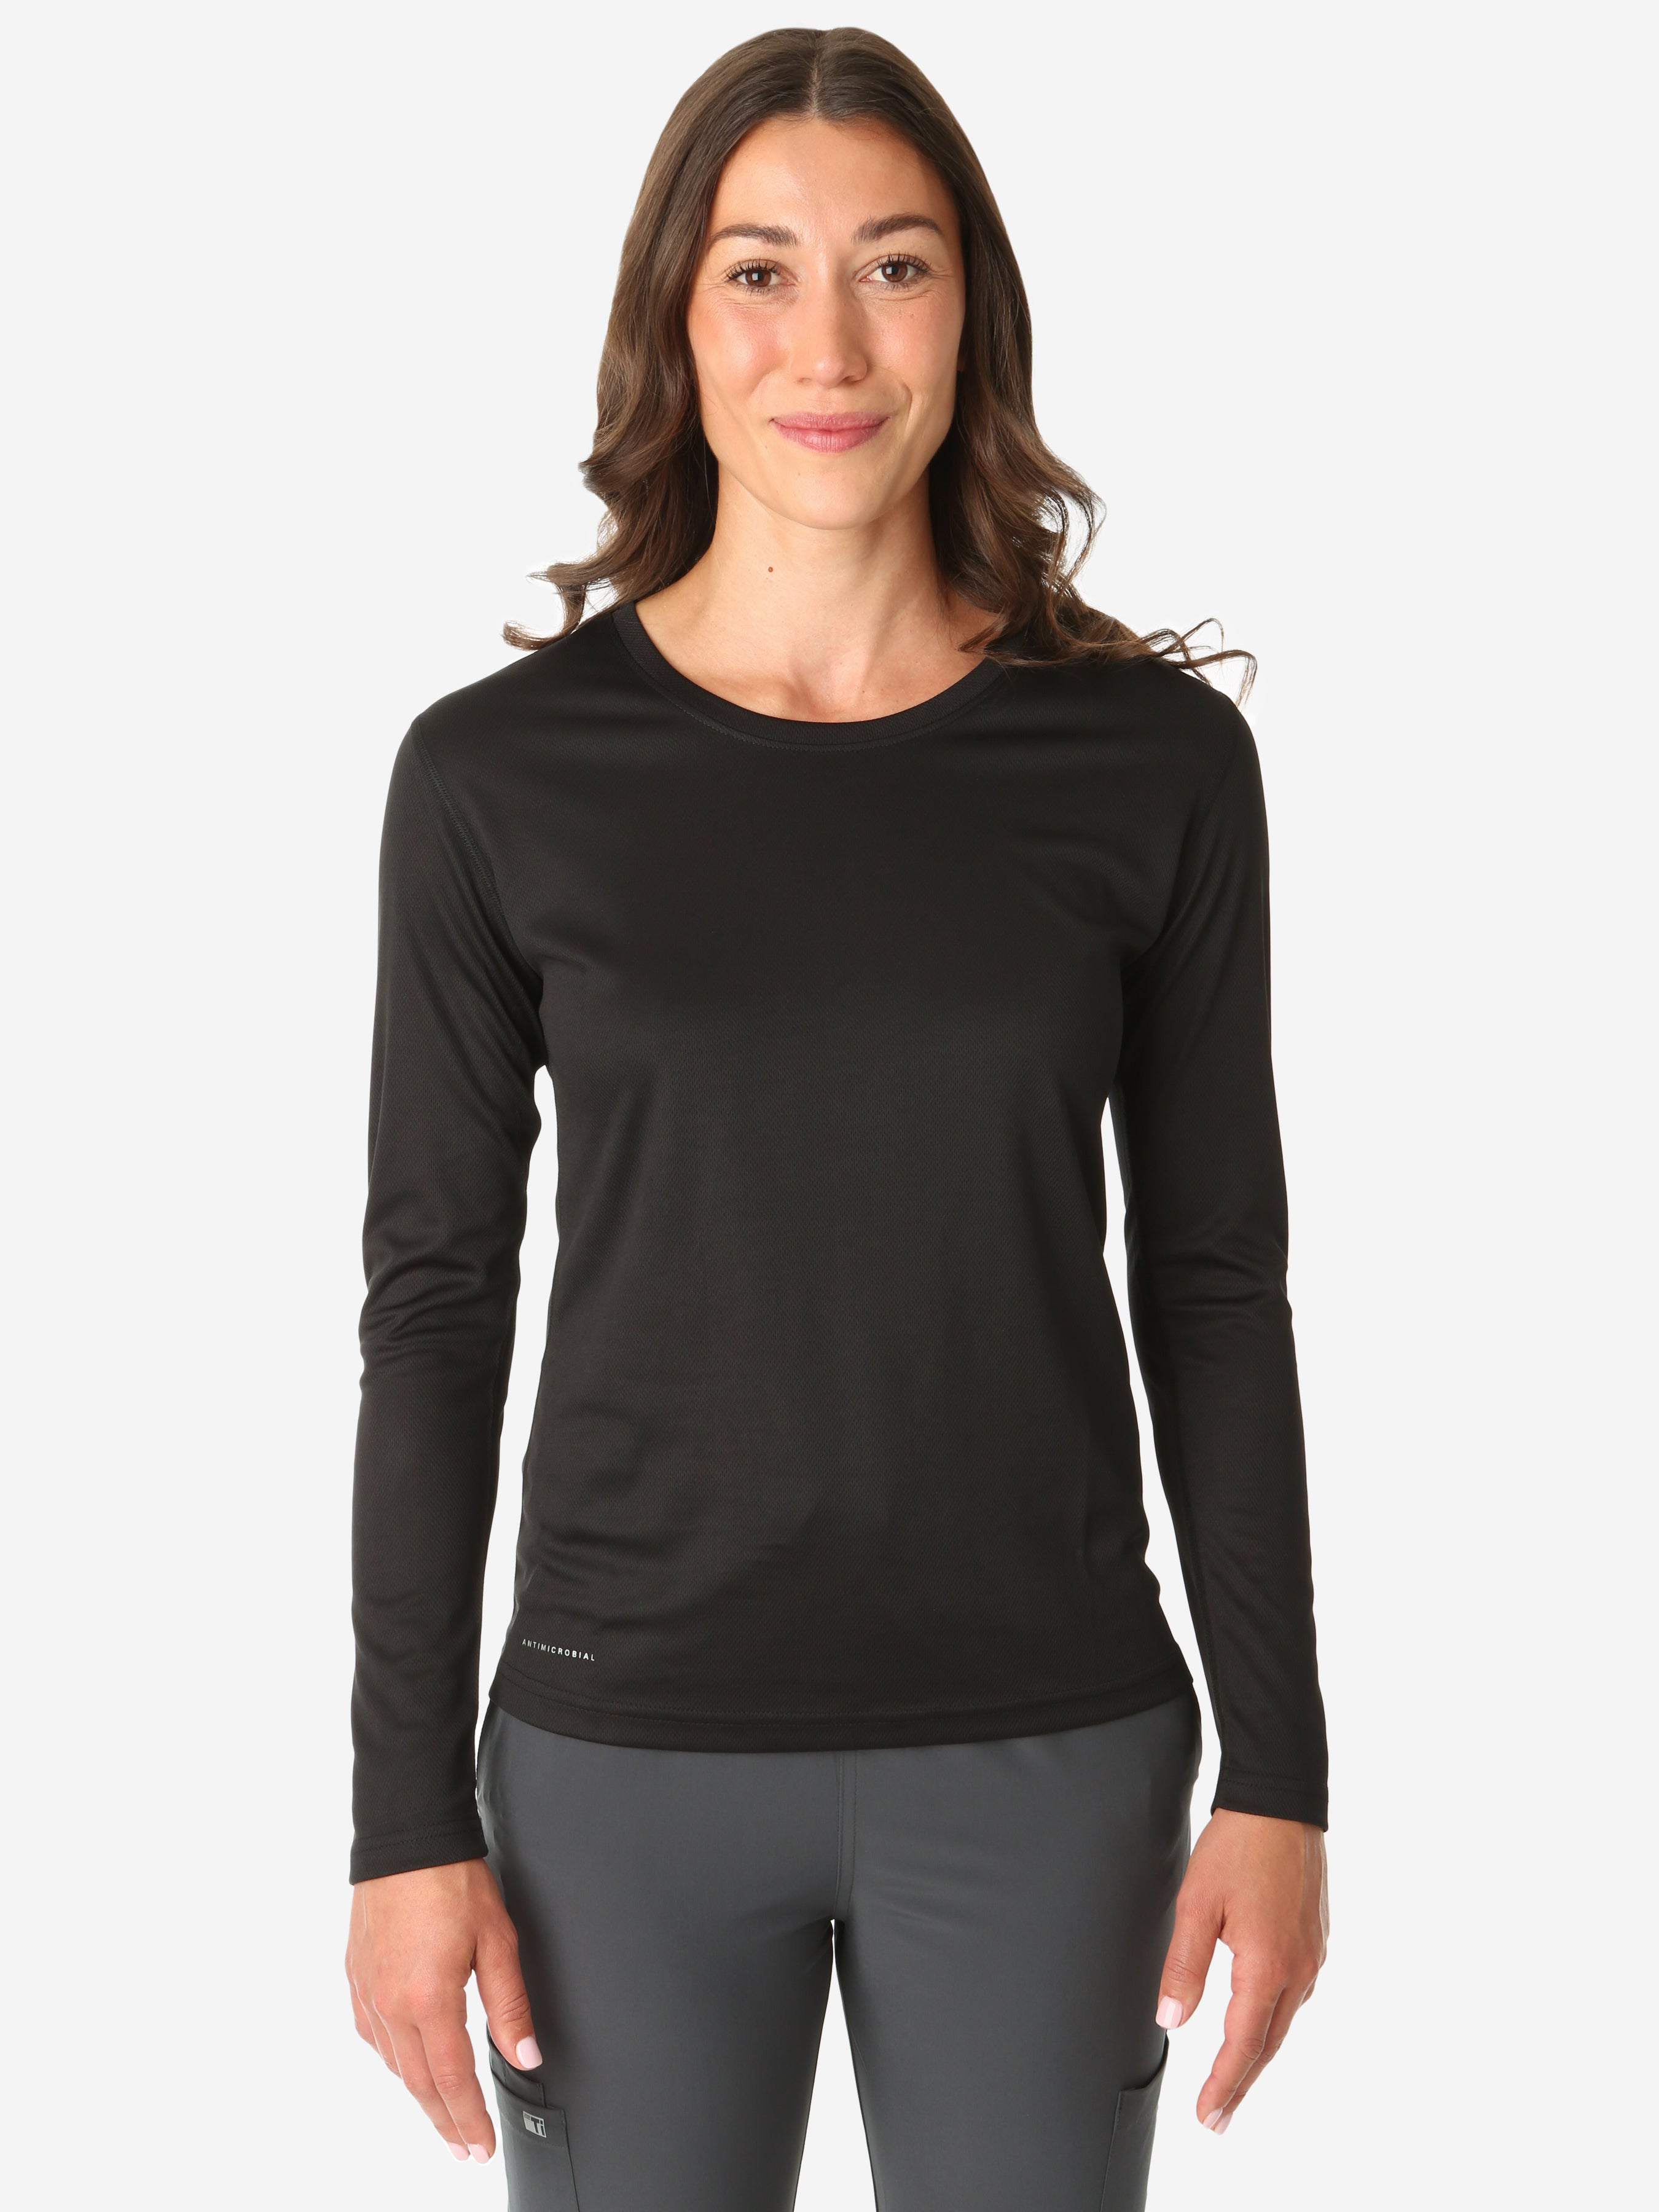 Women's Black Long Sleeve Shirts